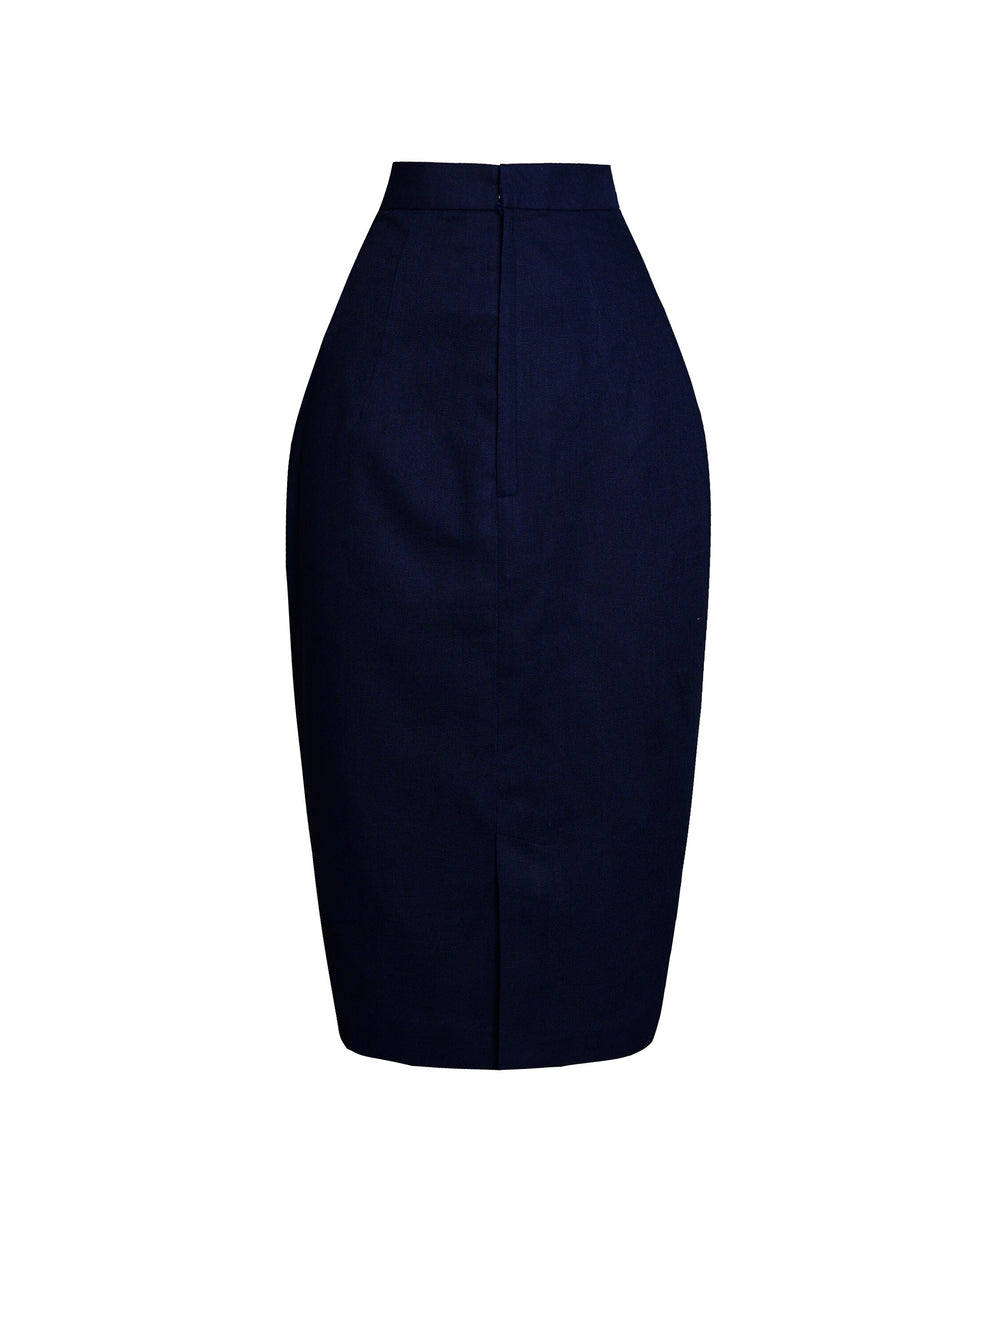 MTO - Denham Skirt in Indigo Blue Linen